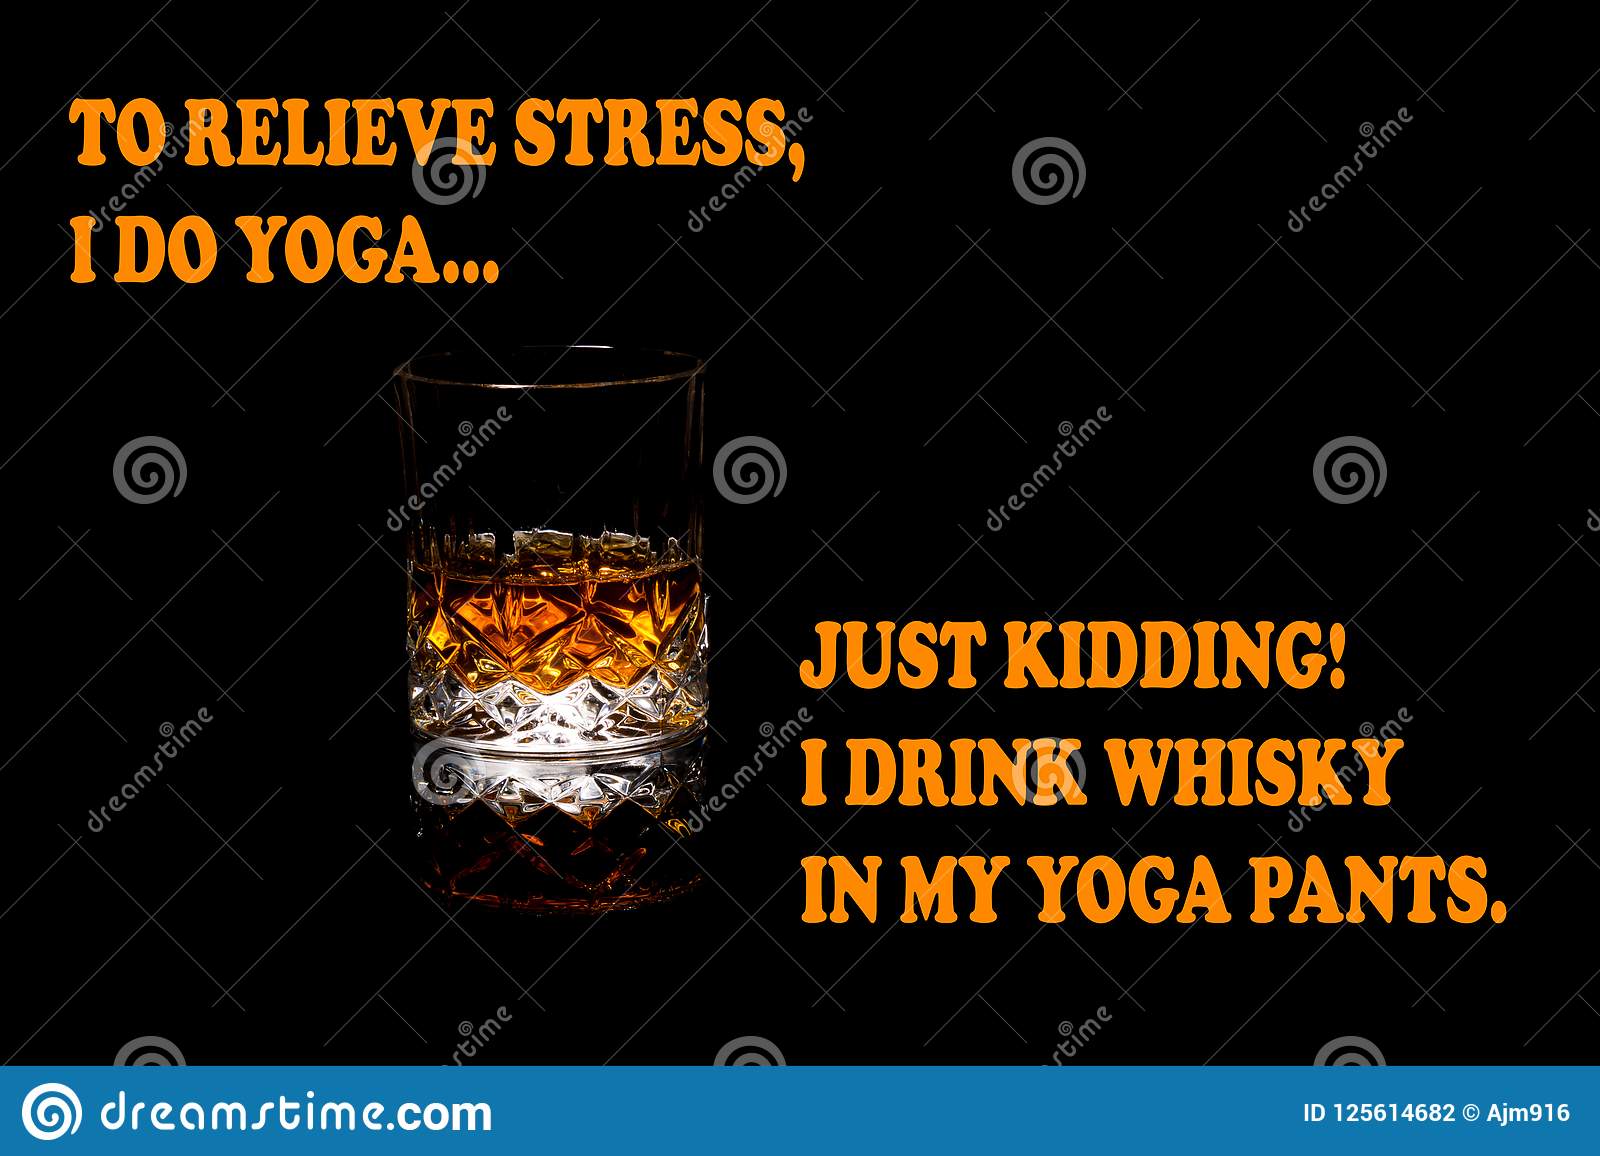 whiskey-funny-meme-i-drink-yoga-pants-memes-sayings-125614682.jpg